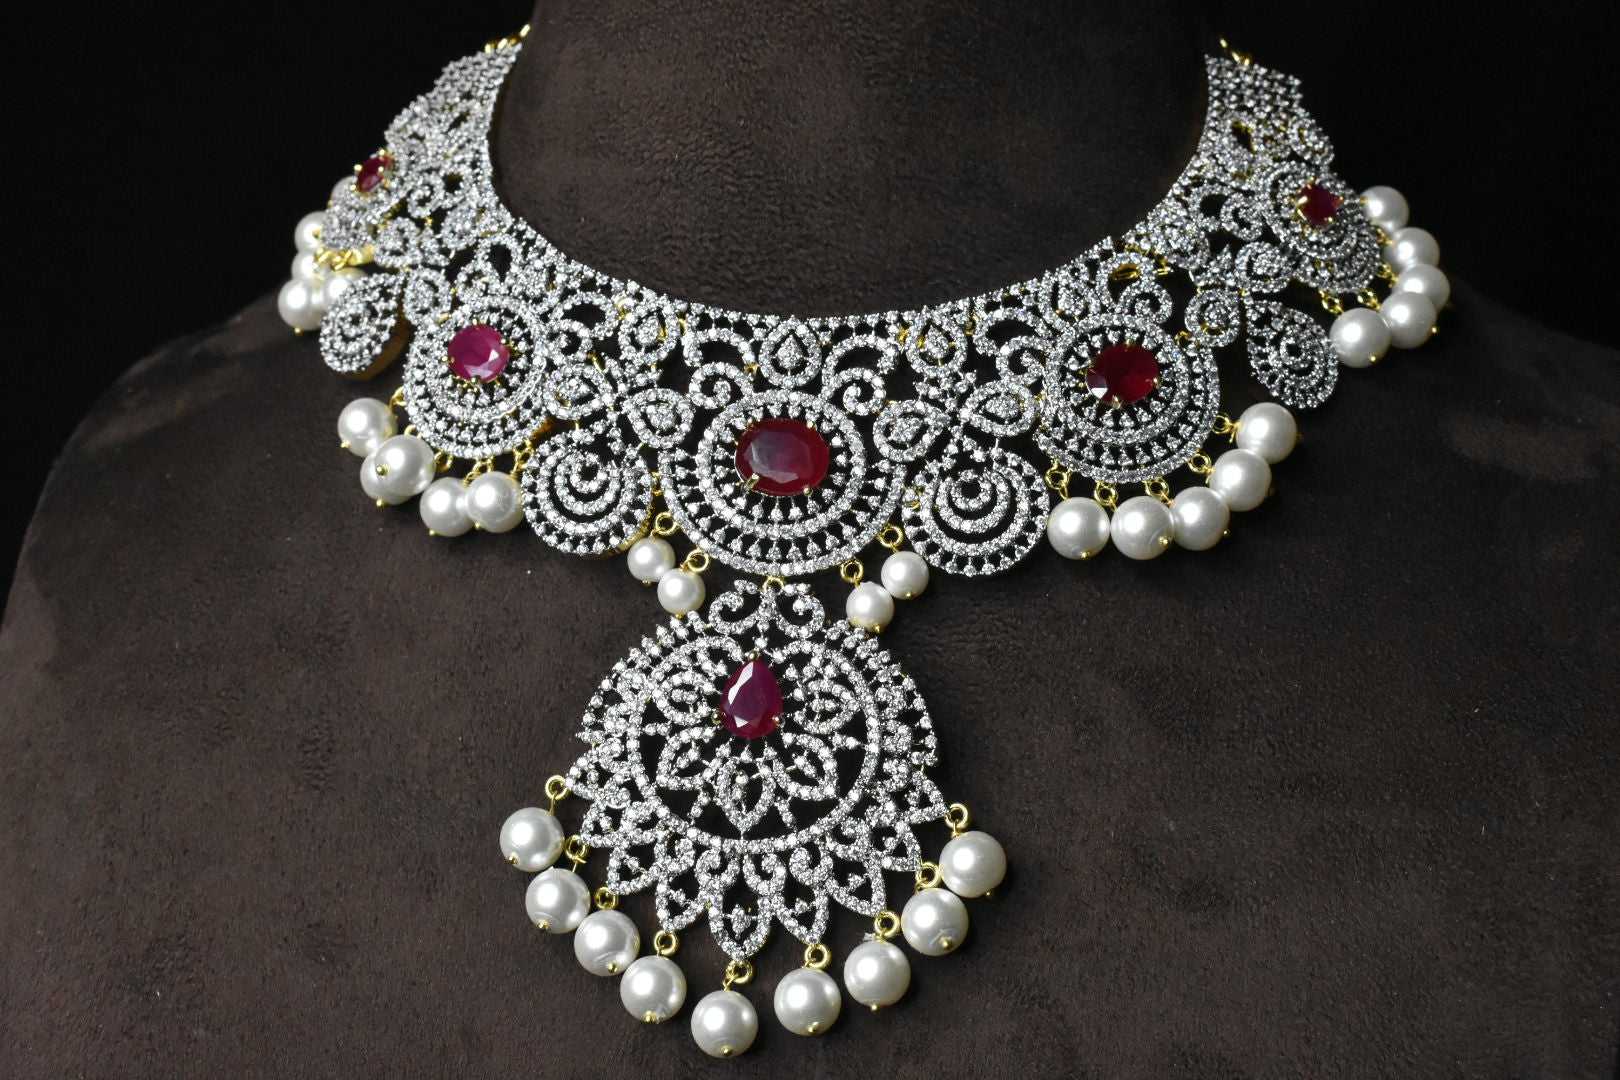 Empressive American Diamond Necklace set